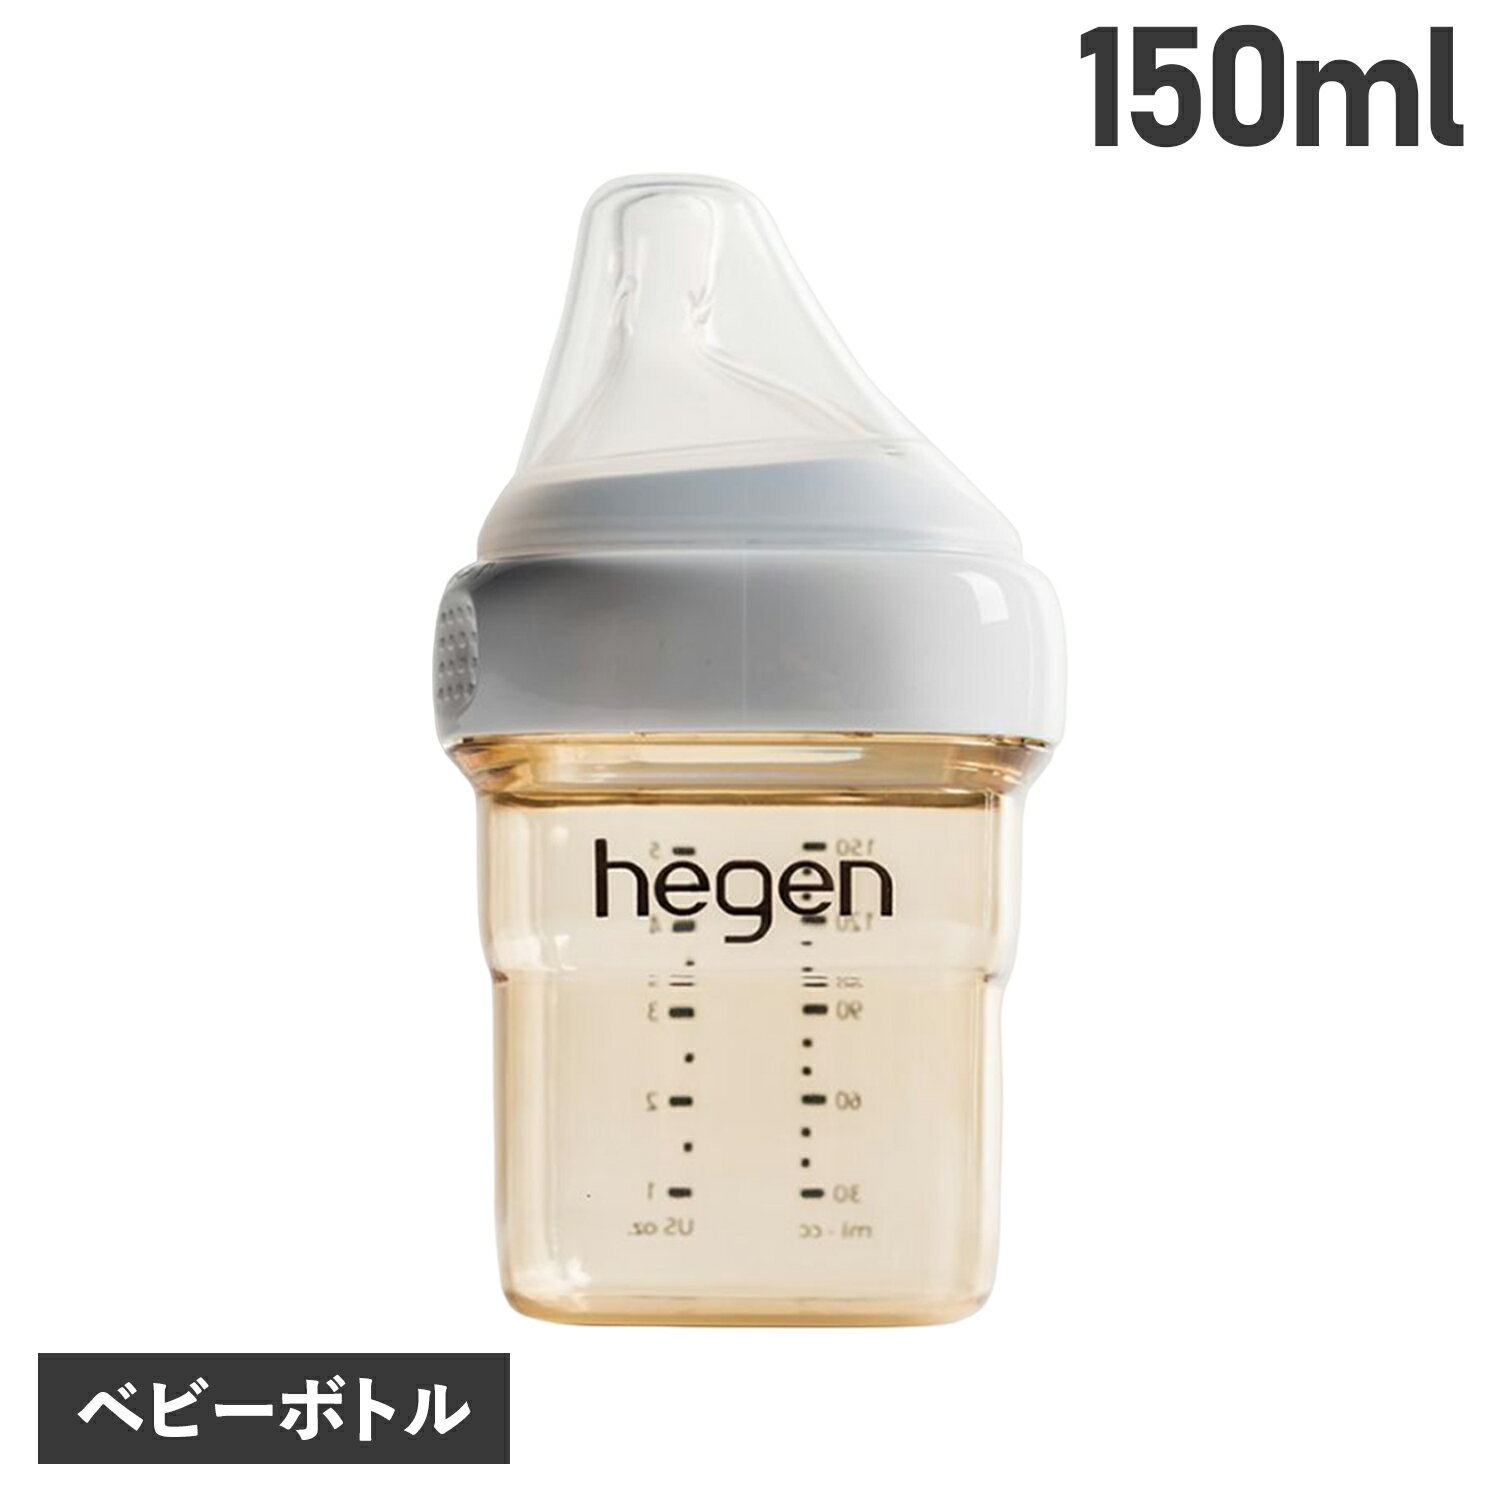  hegen BABY BOTTLE へーゲン 哺乳瓶 ベビーボトル 150ml 新生児 ベビー PPSU 耐熱 広口 12152105